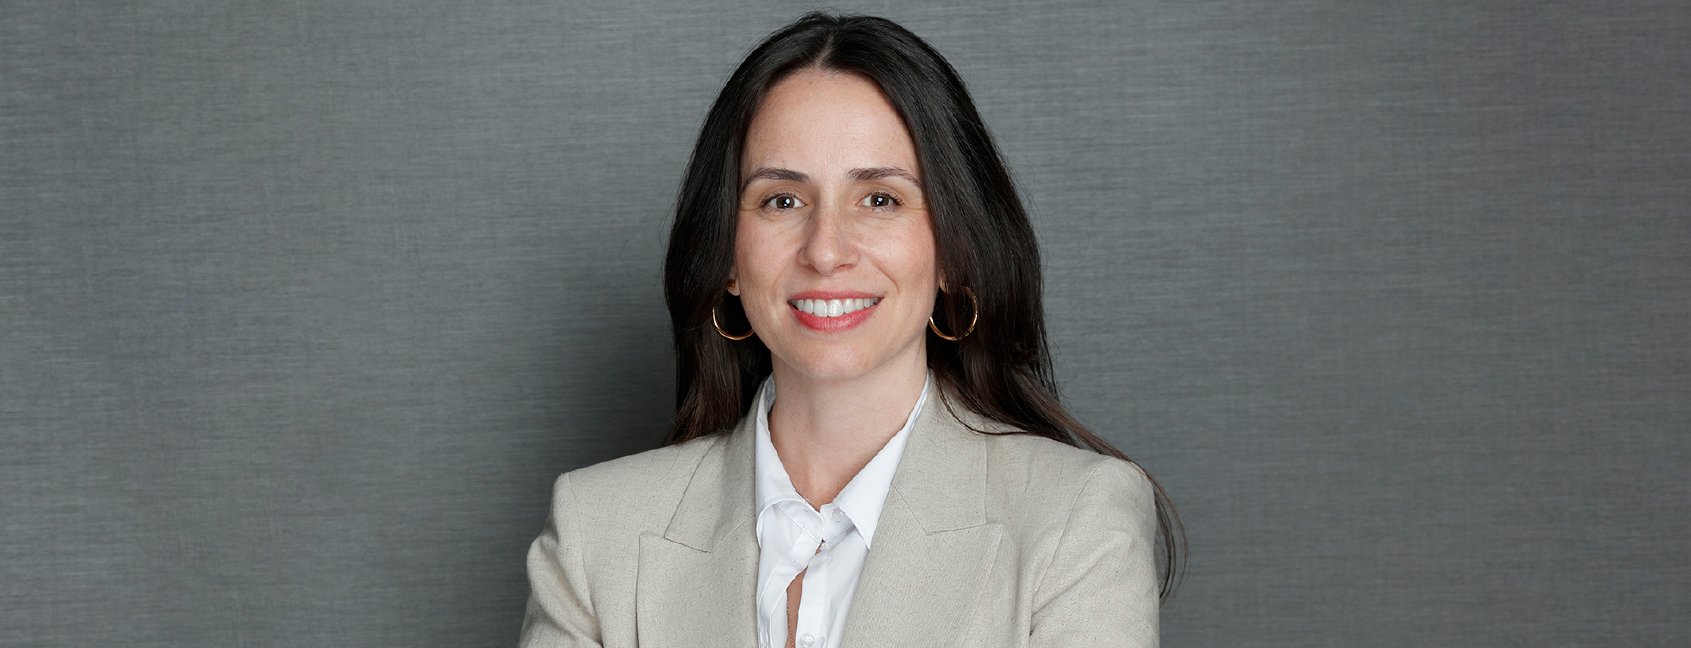 Gemma Gutiérrez, new General Director of Marketing Solutions for LLYC Europe